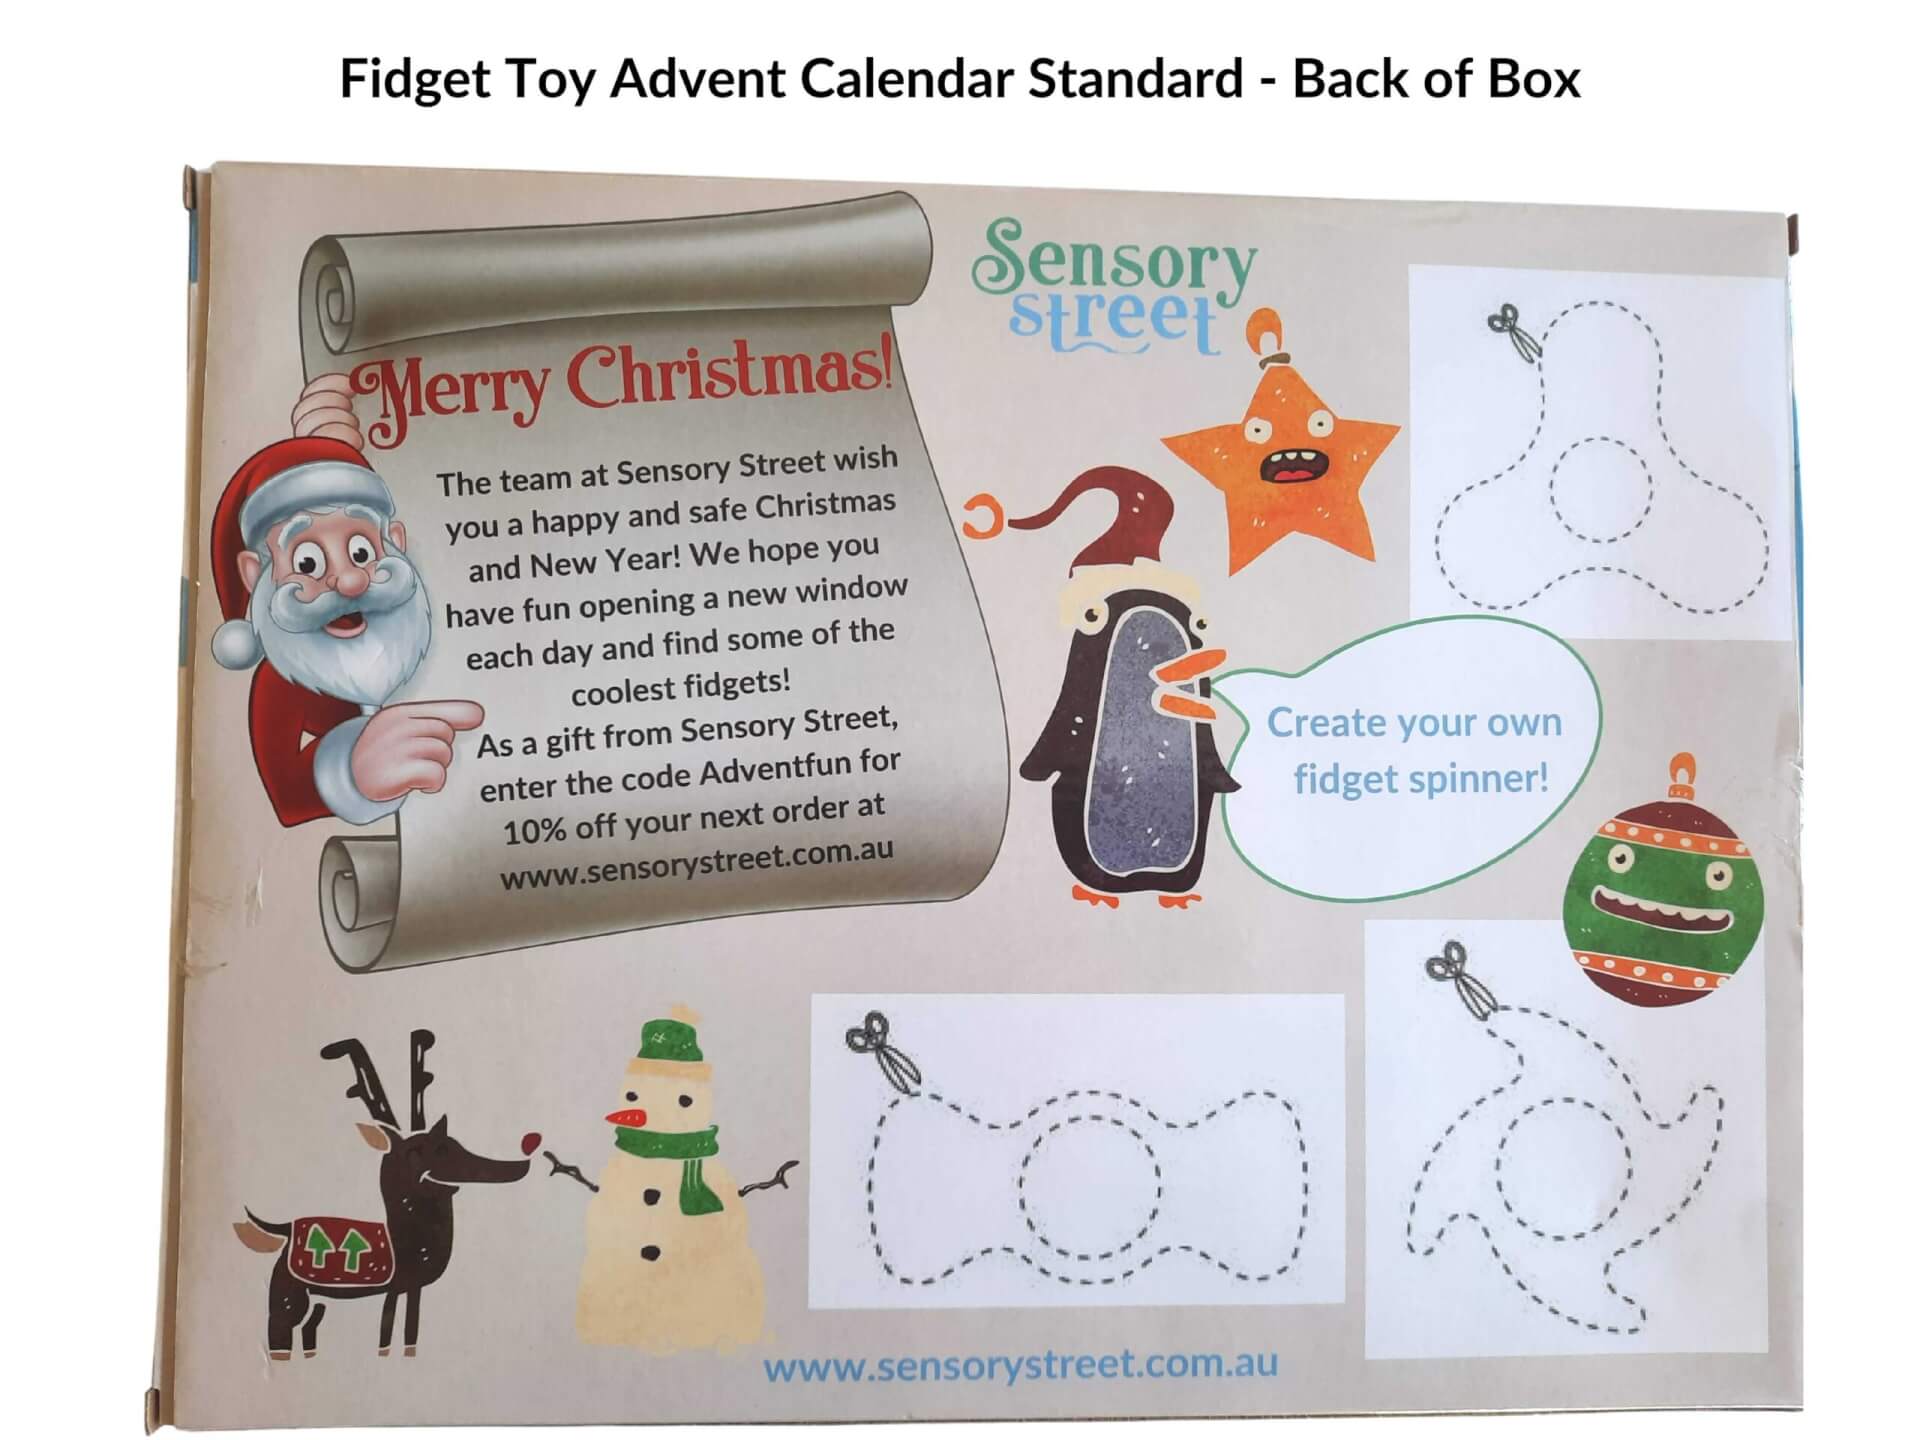 Fidget Toy Advent Calendar Standard back of box